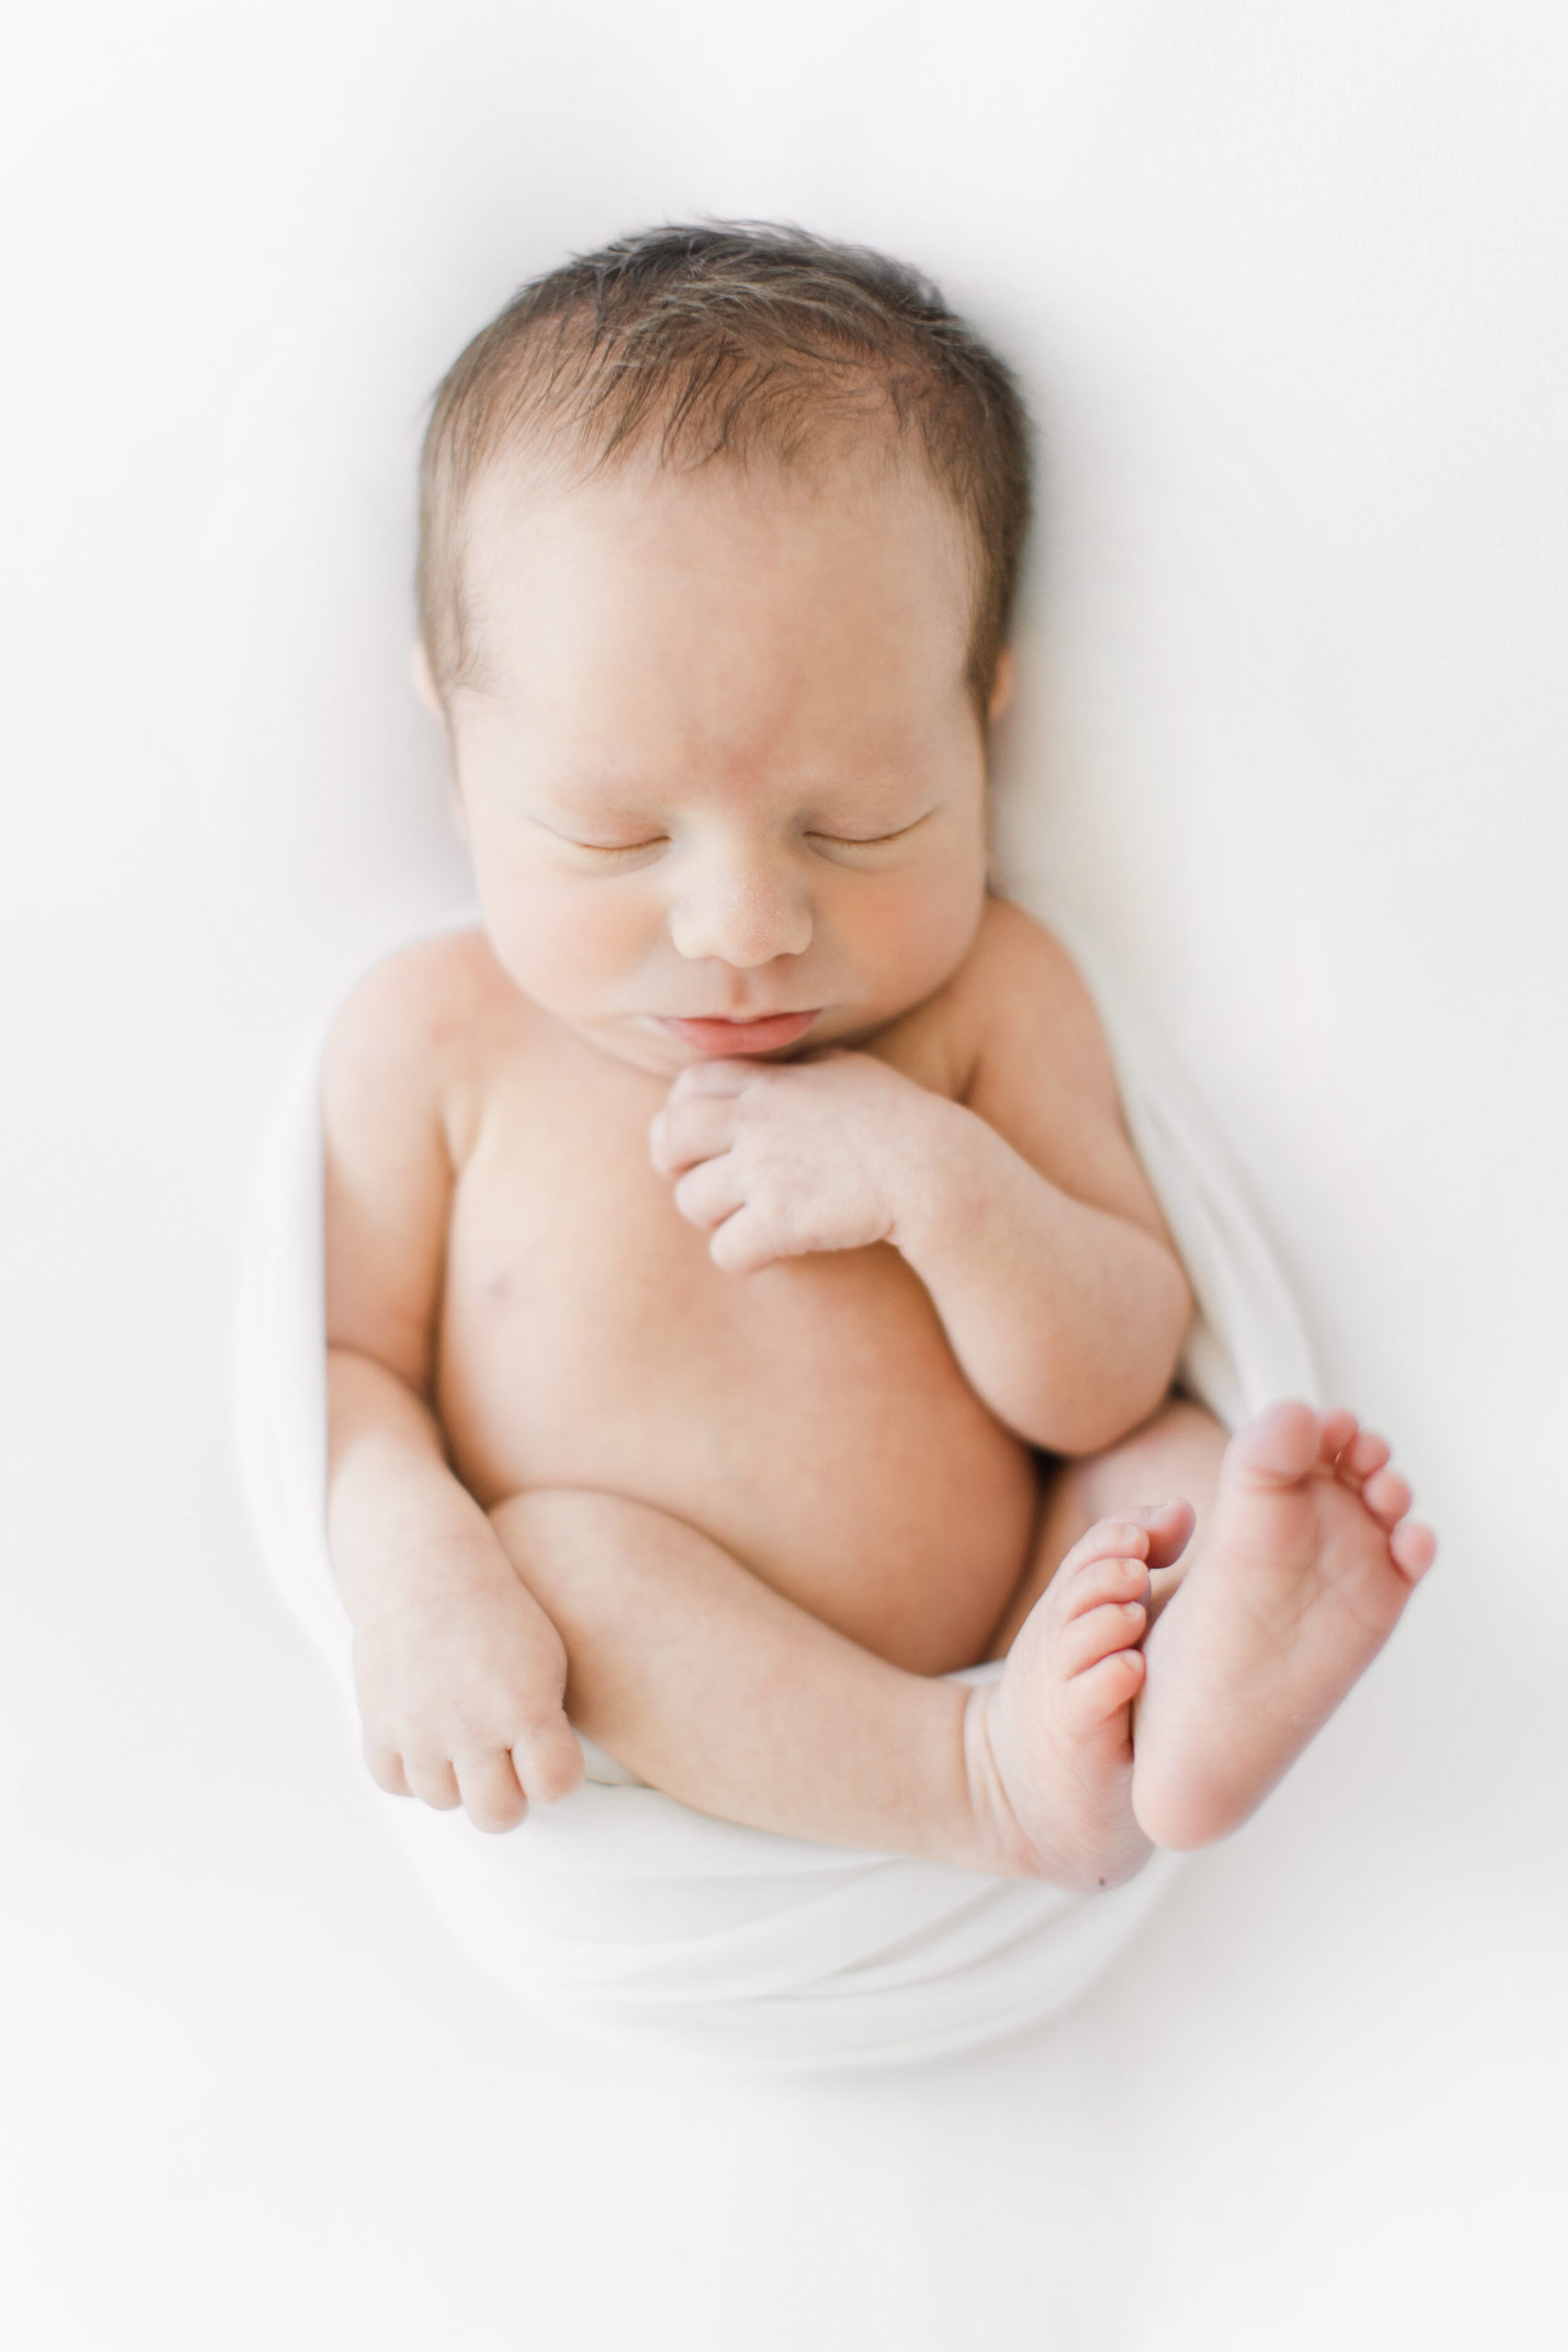 newborn baby boy photo session